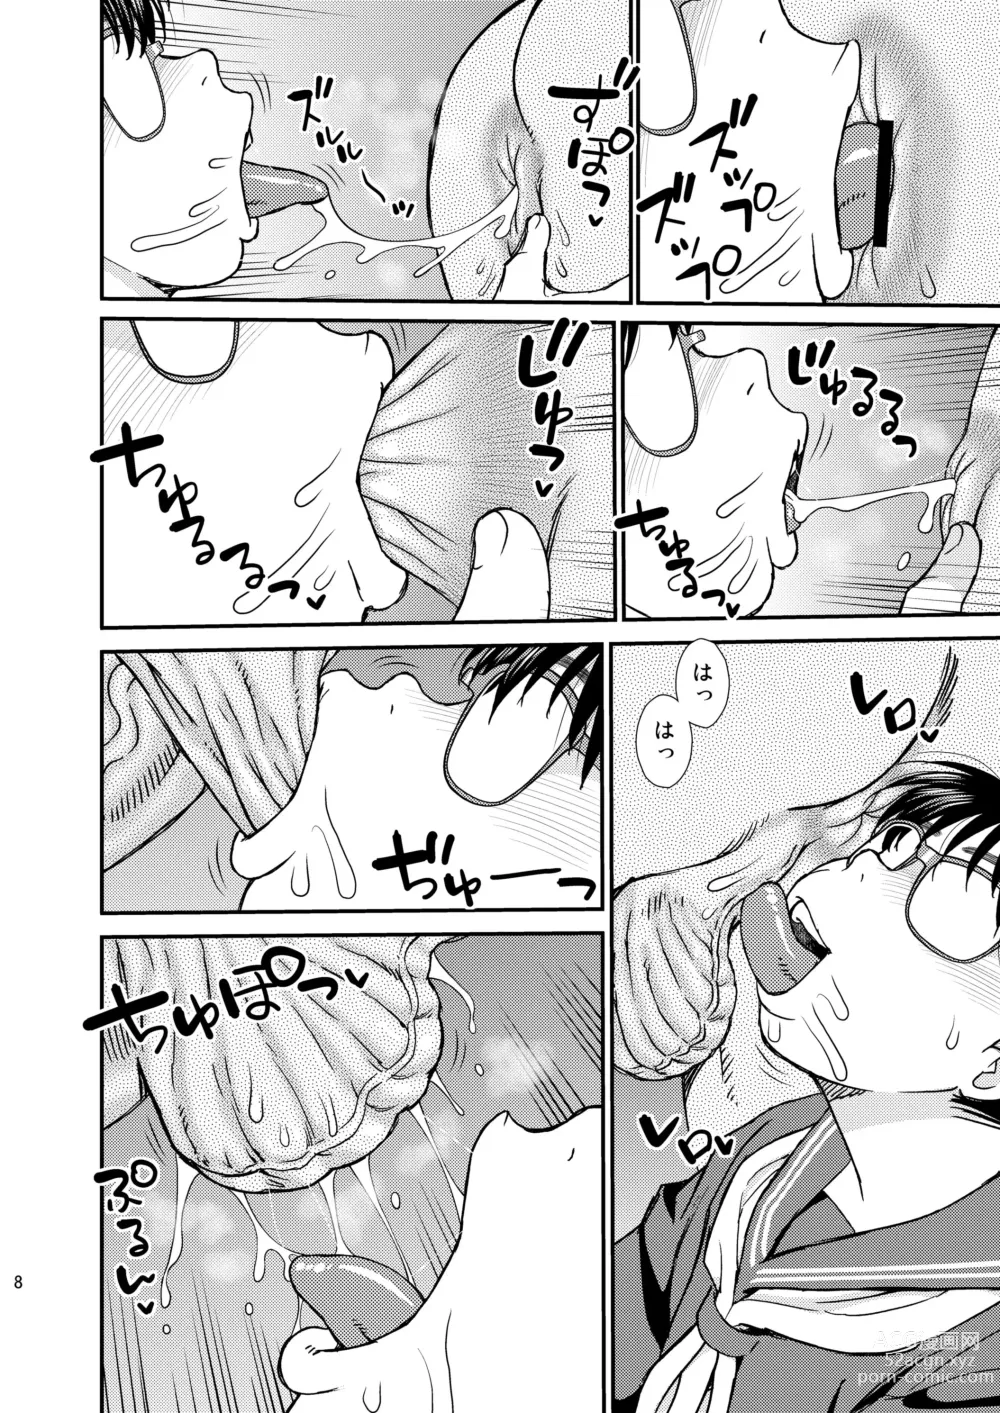 Page 7 of doujinshi Tatsumi-san no